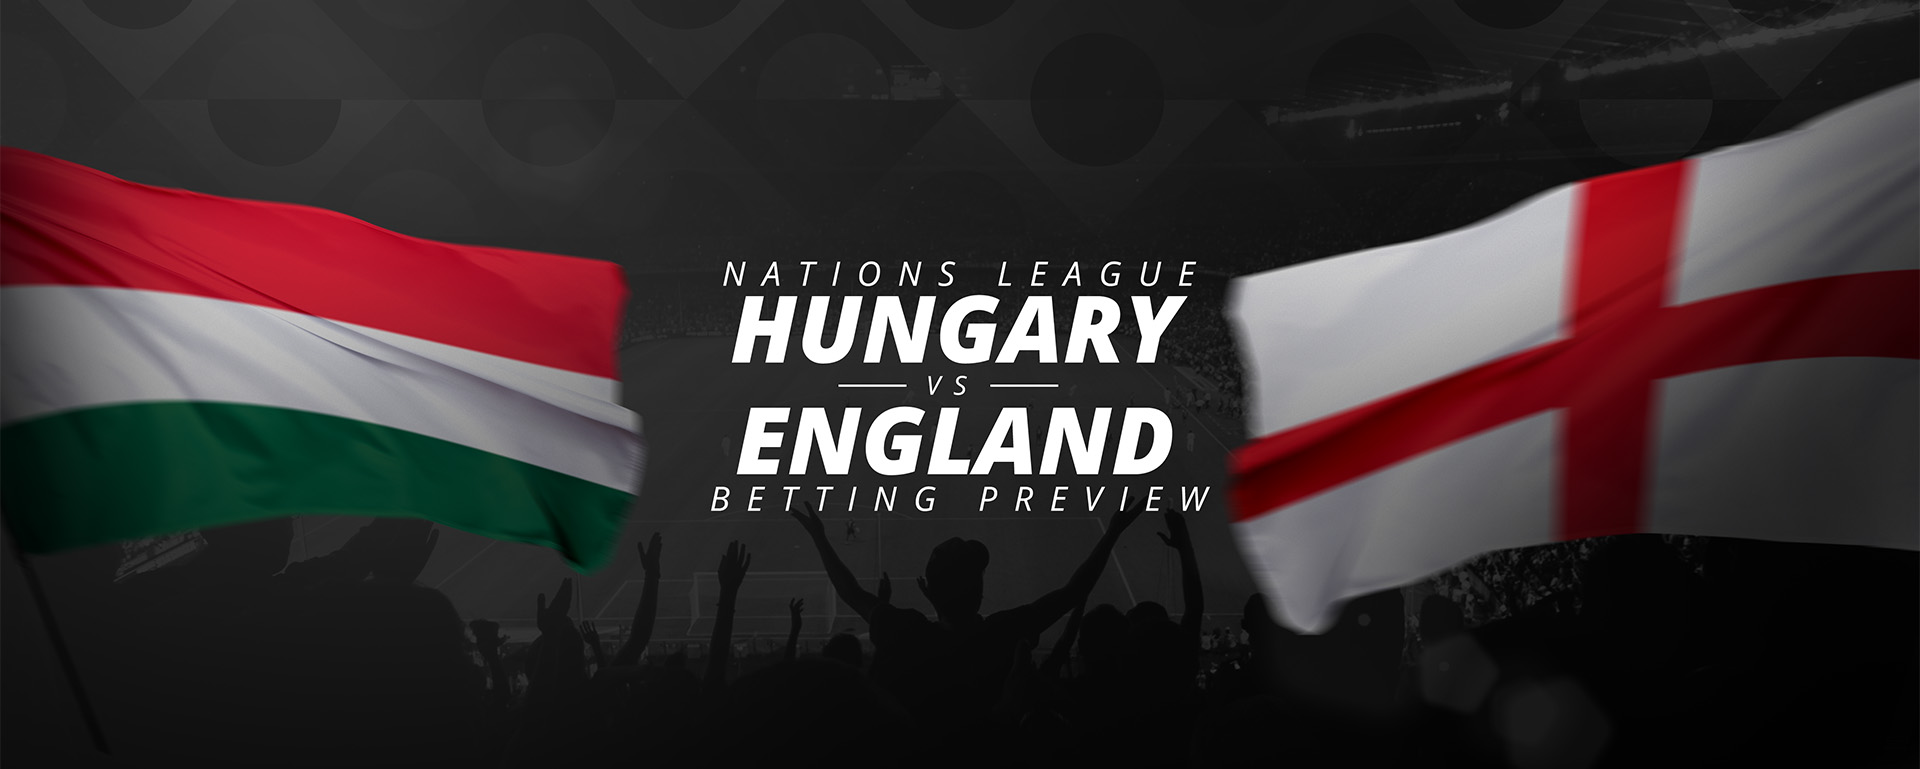 HUNGARY VS ENGLAND: NATIONS LEAGUE BETTING TIPS